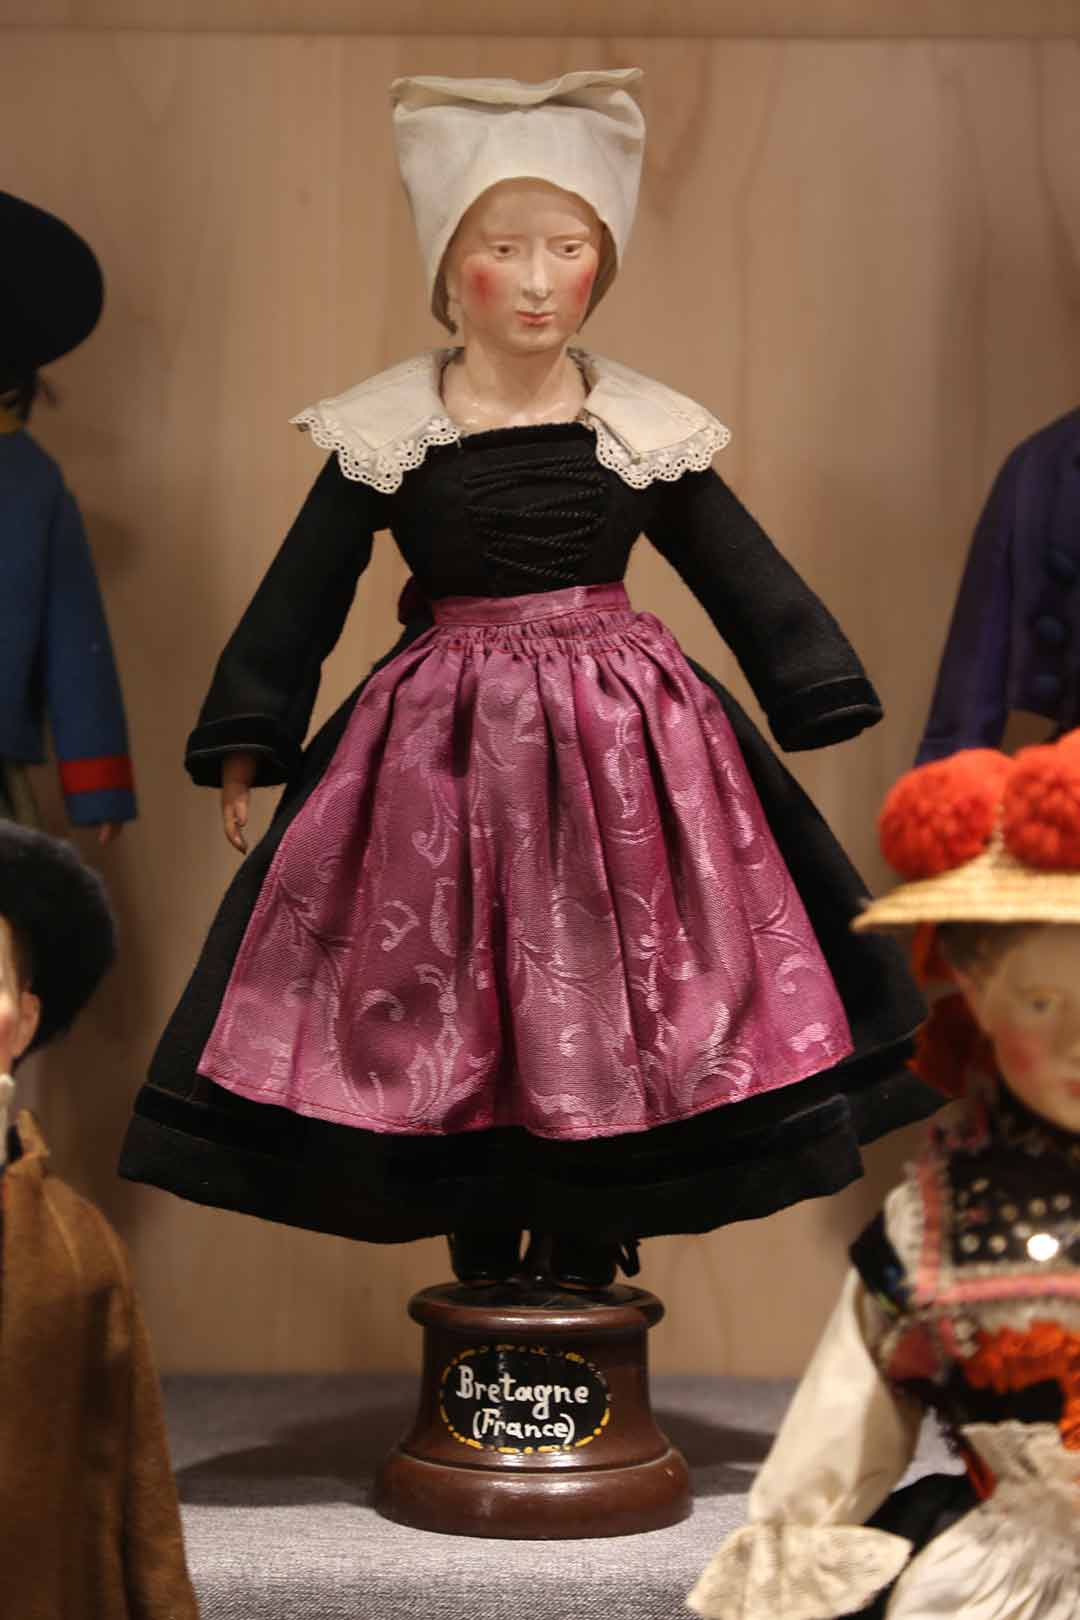 Female doll wearing black and purple dress. labelled Bretagne (France)